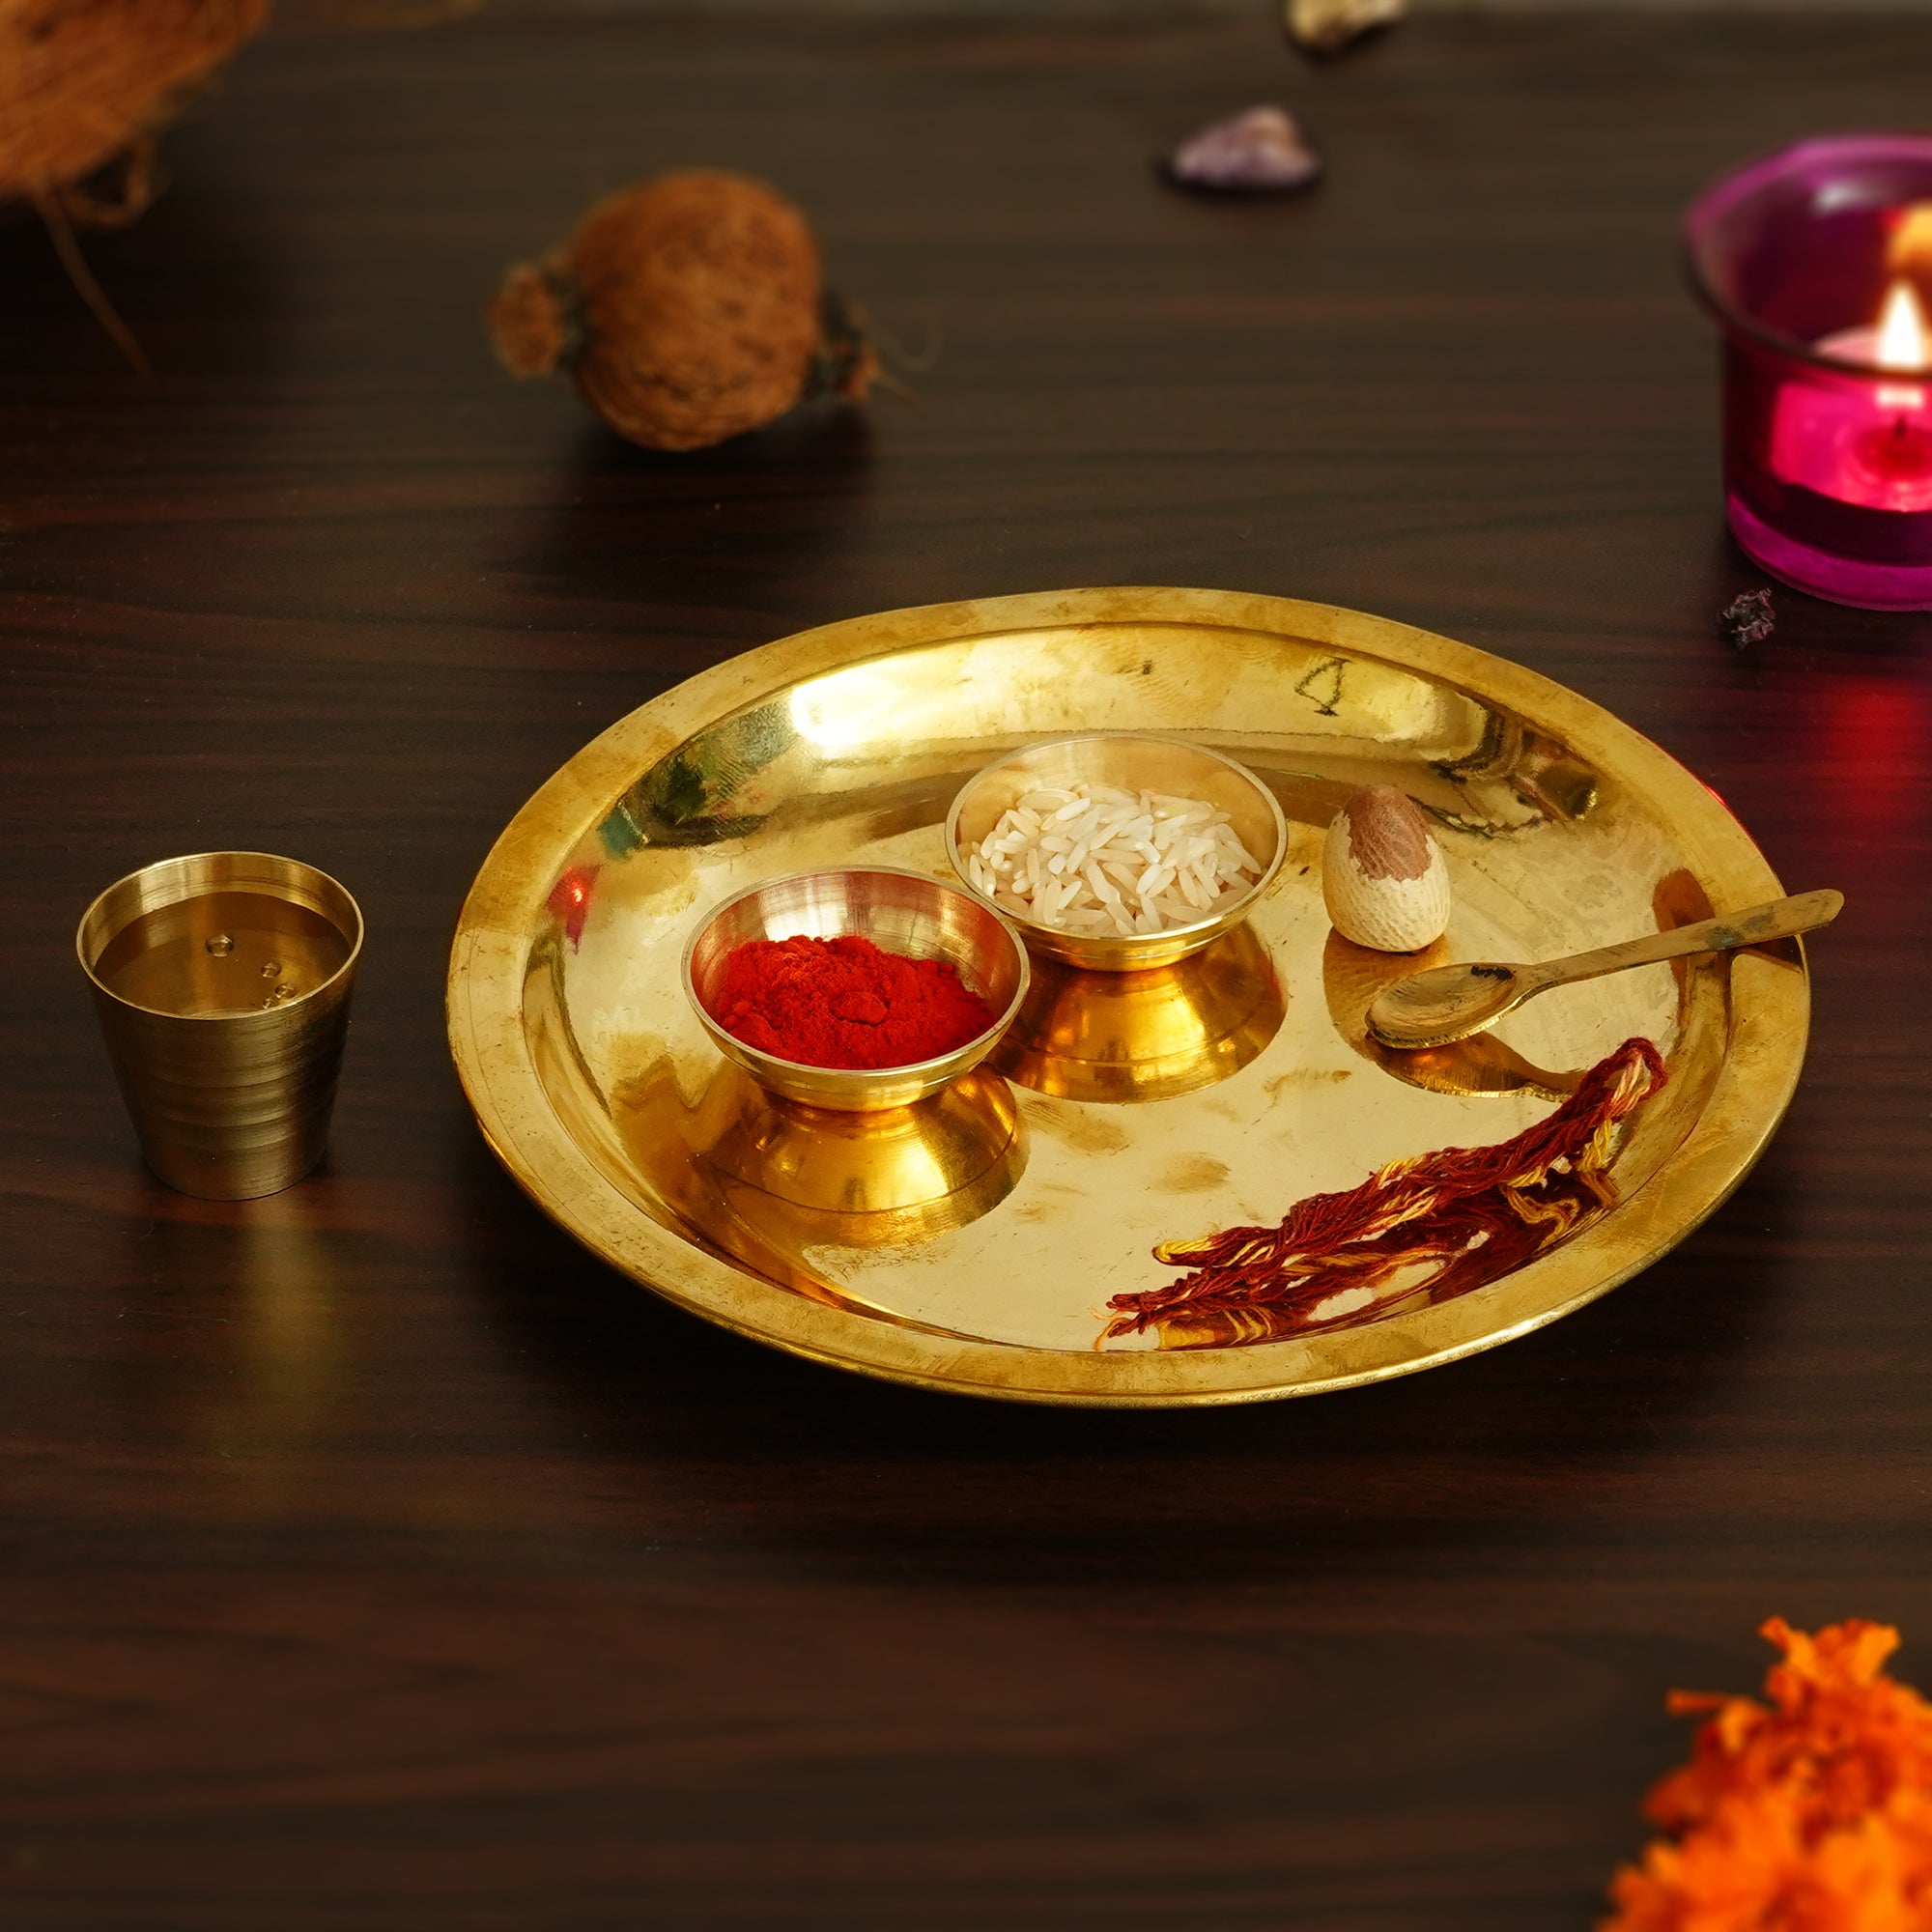 7 Inch Brass Pooja Thali with 2 Katori/Bowls, 1 Spoon and 1 Glass